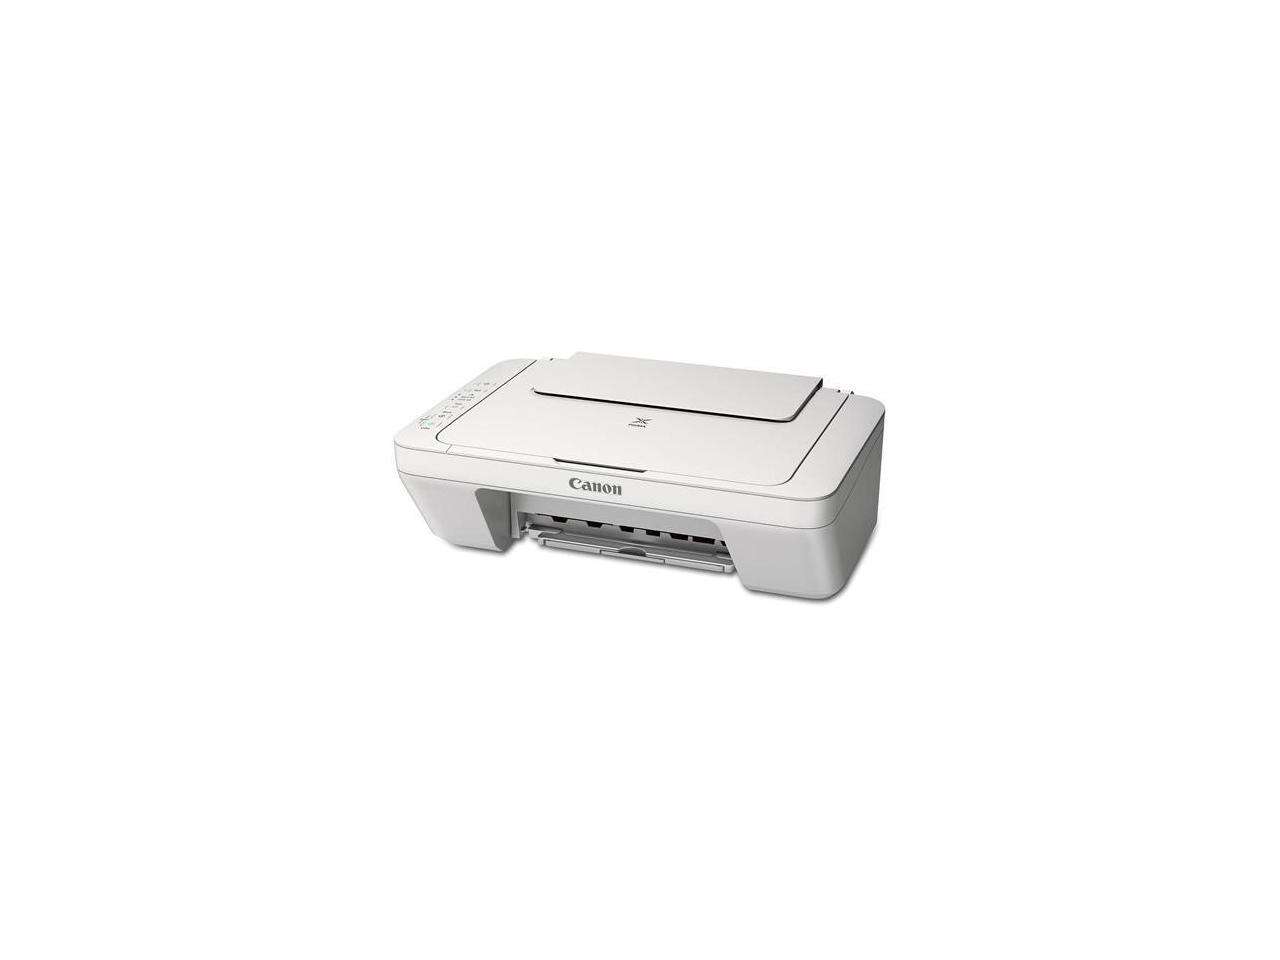 Canon PIXMA MG2920 Wireless All-In-One Inkjet Printer - White #9500B046